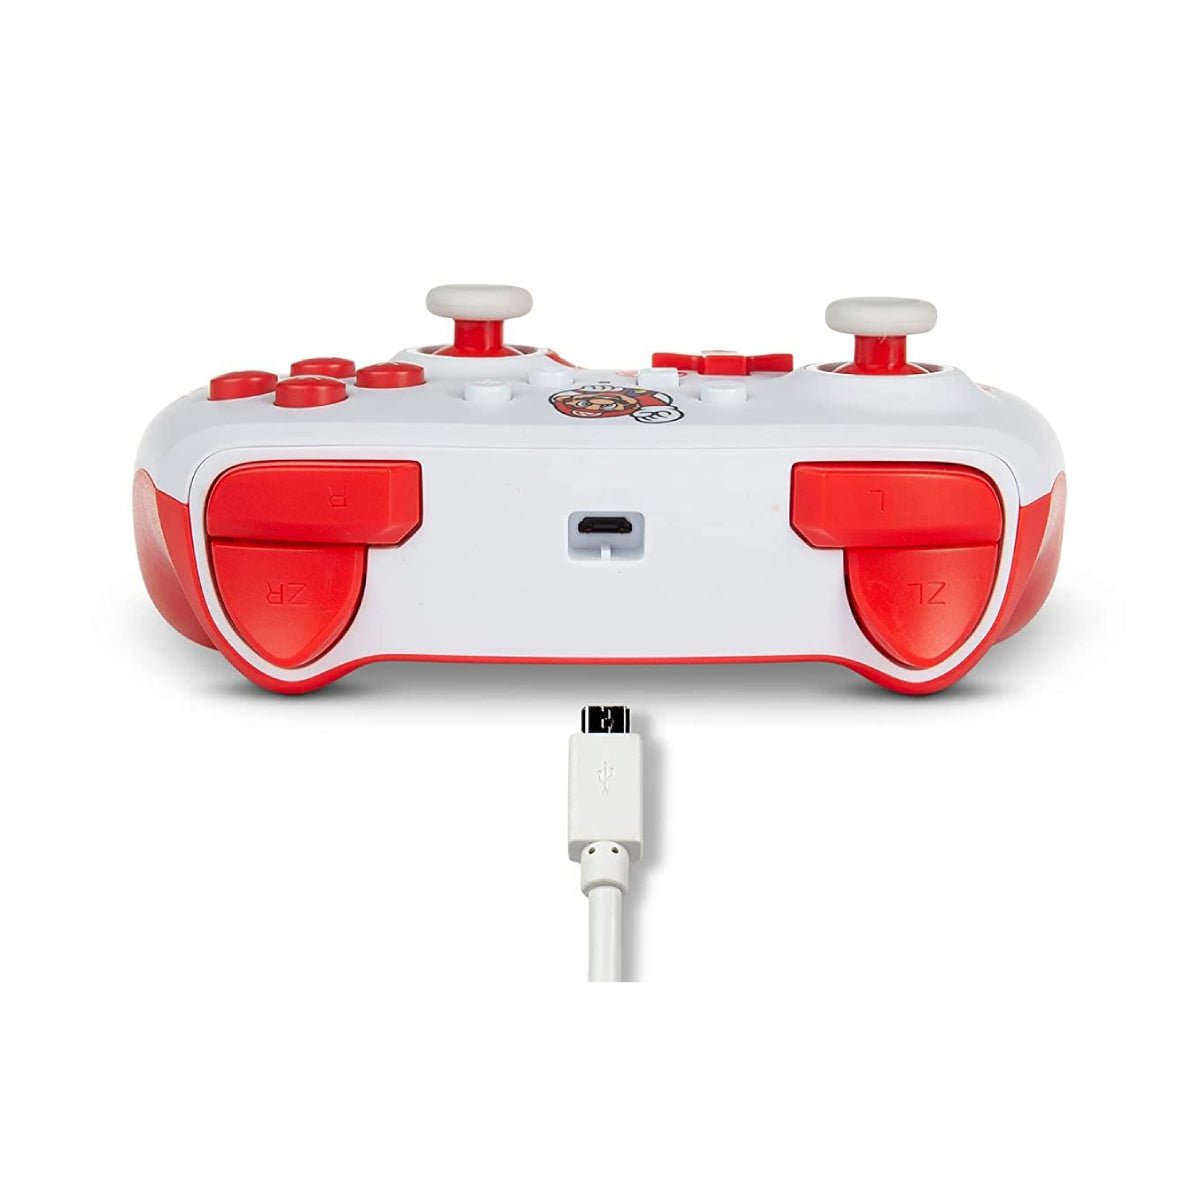 PowerA NSW Enhanced Wired Controller - Mario Red/White - وحدة تحكم لاسلكية - Store 974 | ستور ٩٧٤